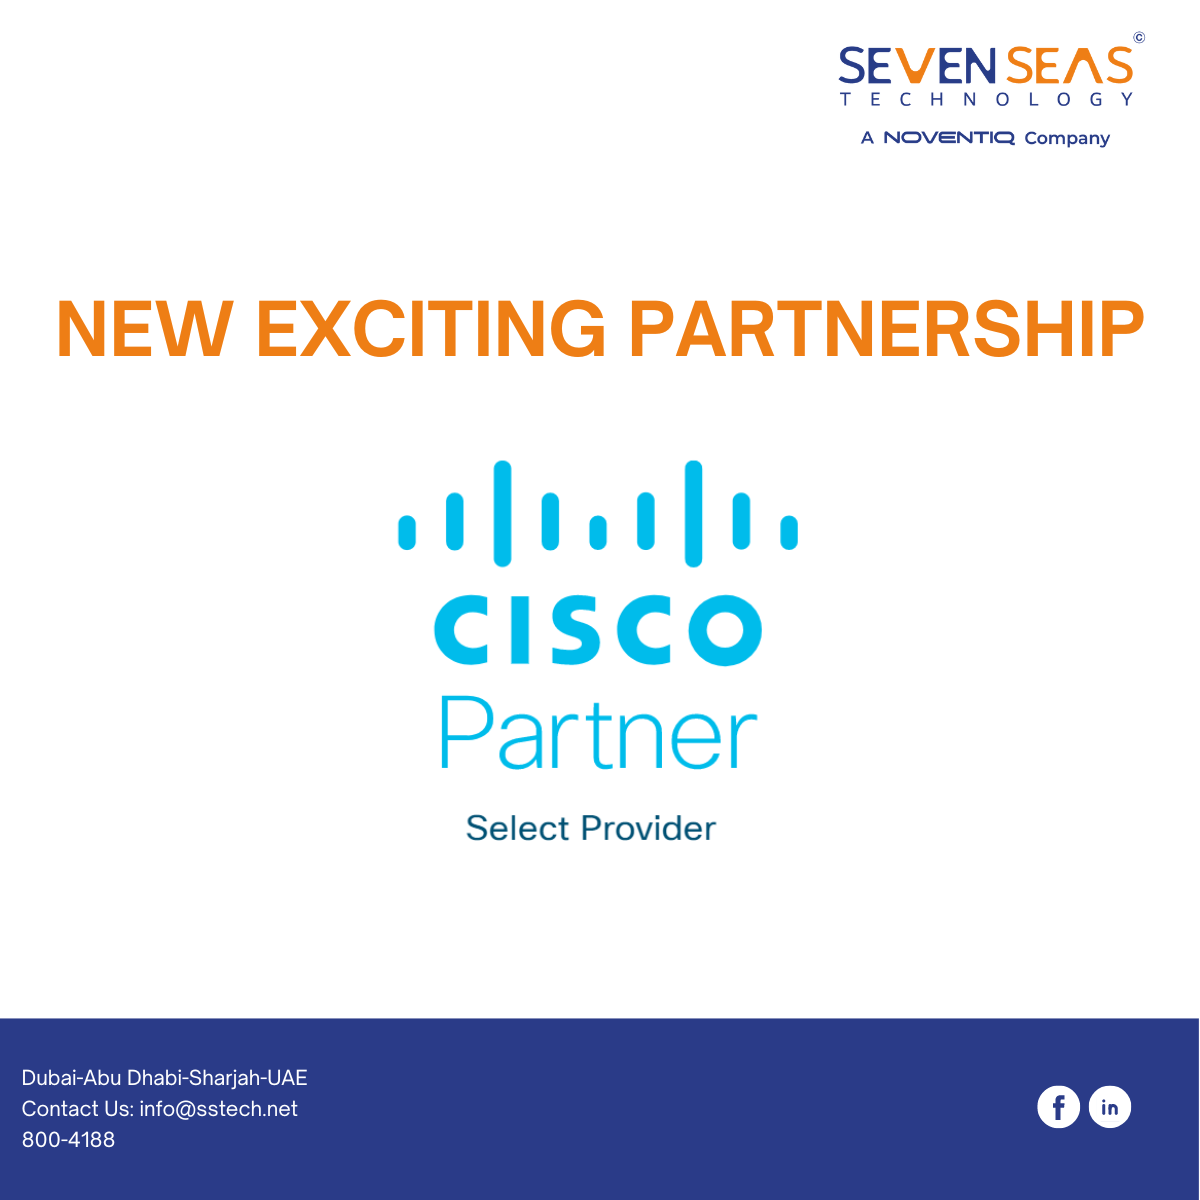 Cisco Select Provider Partner for Cisco MSP